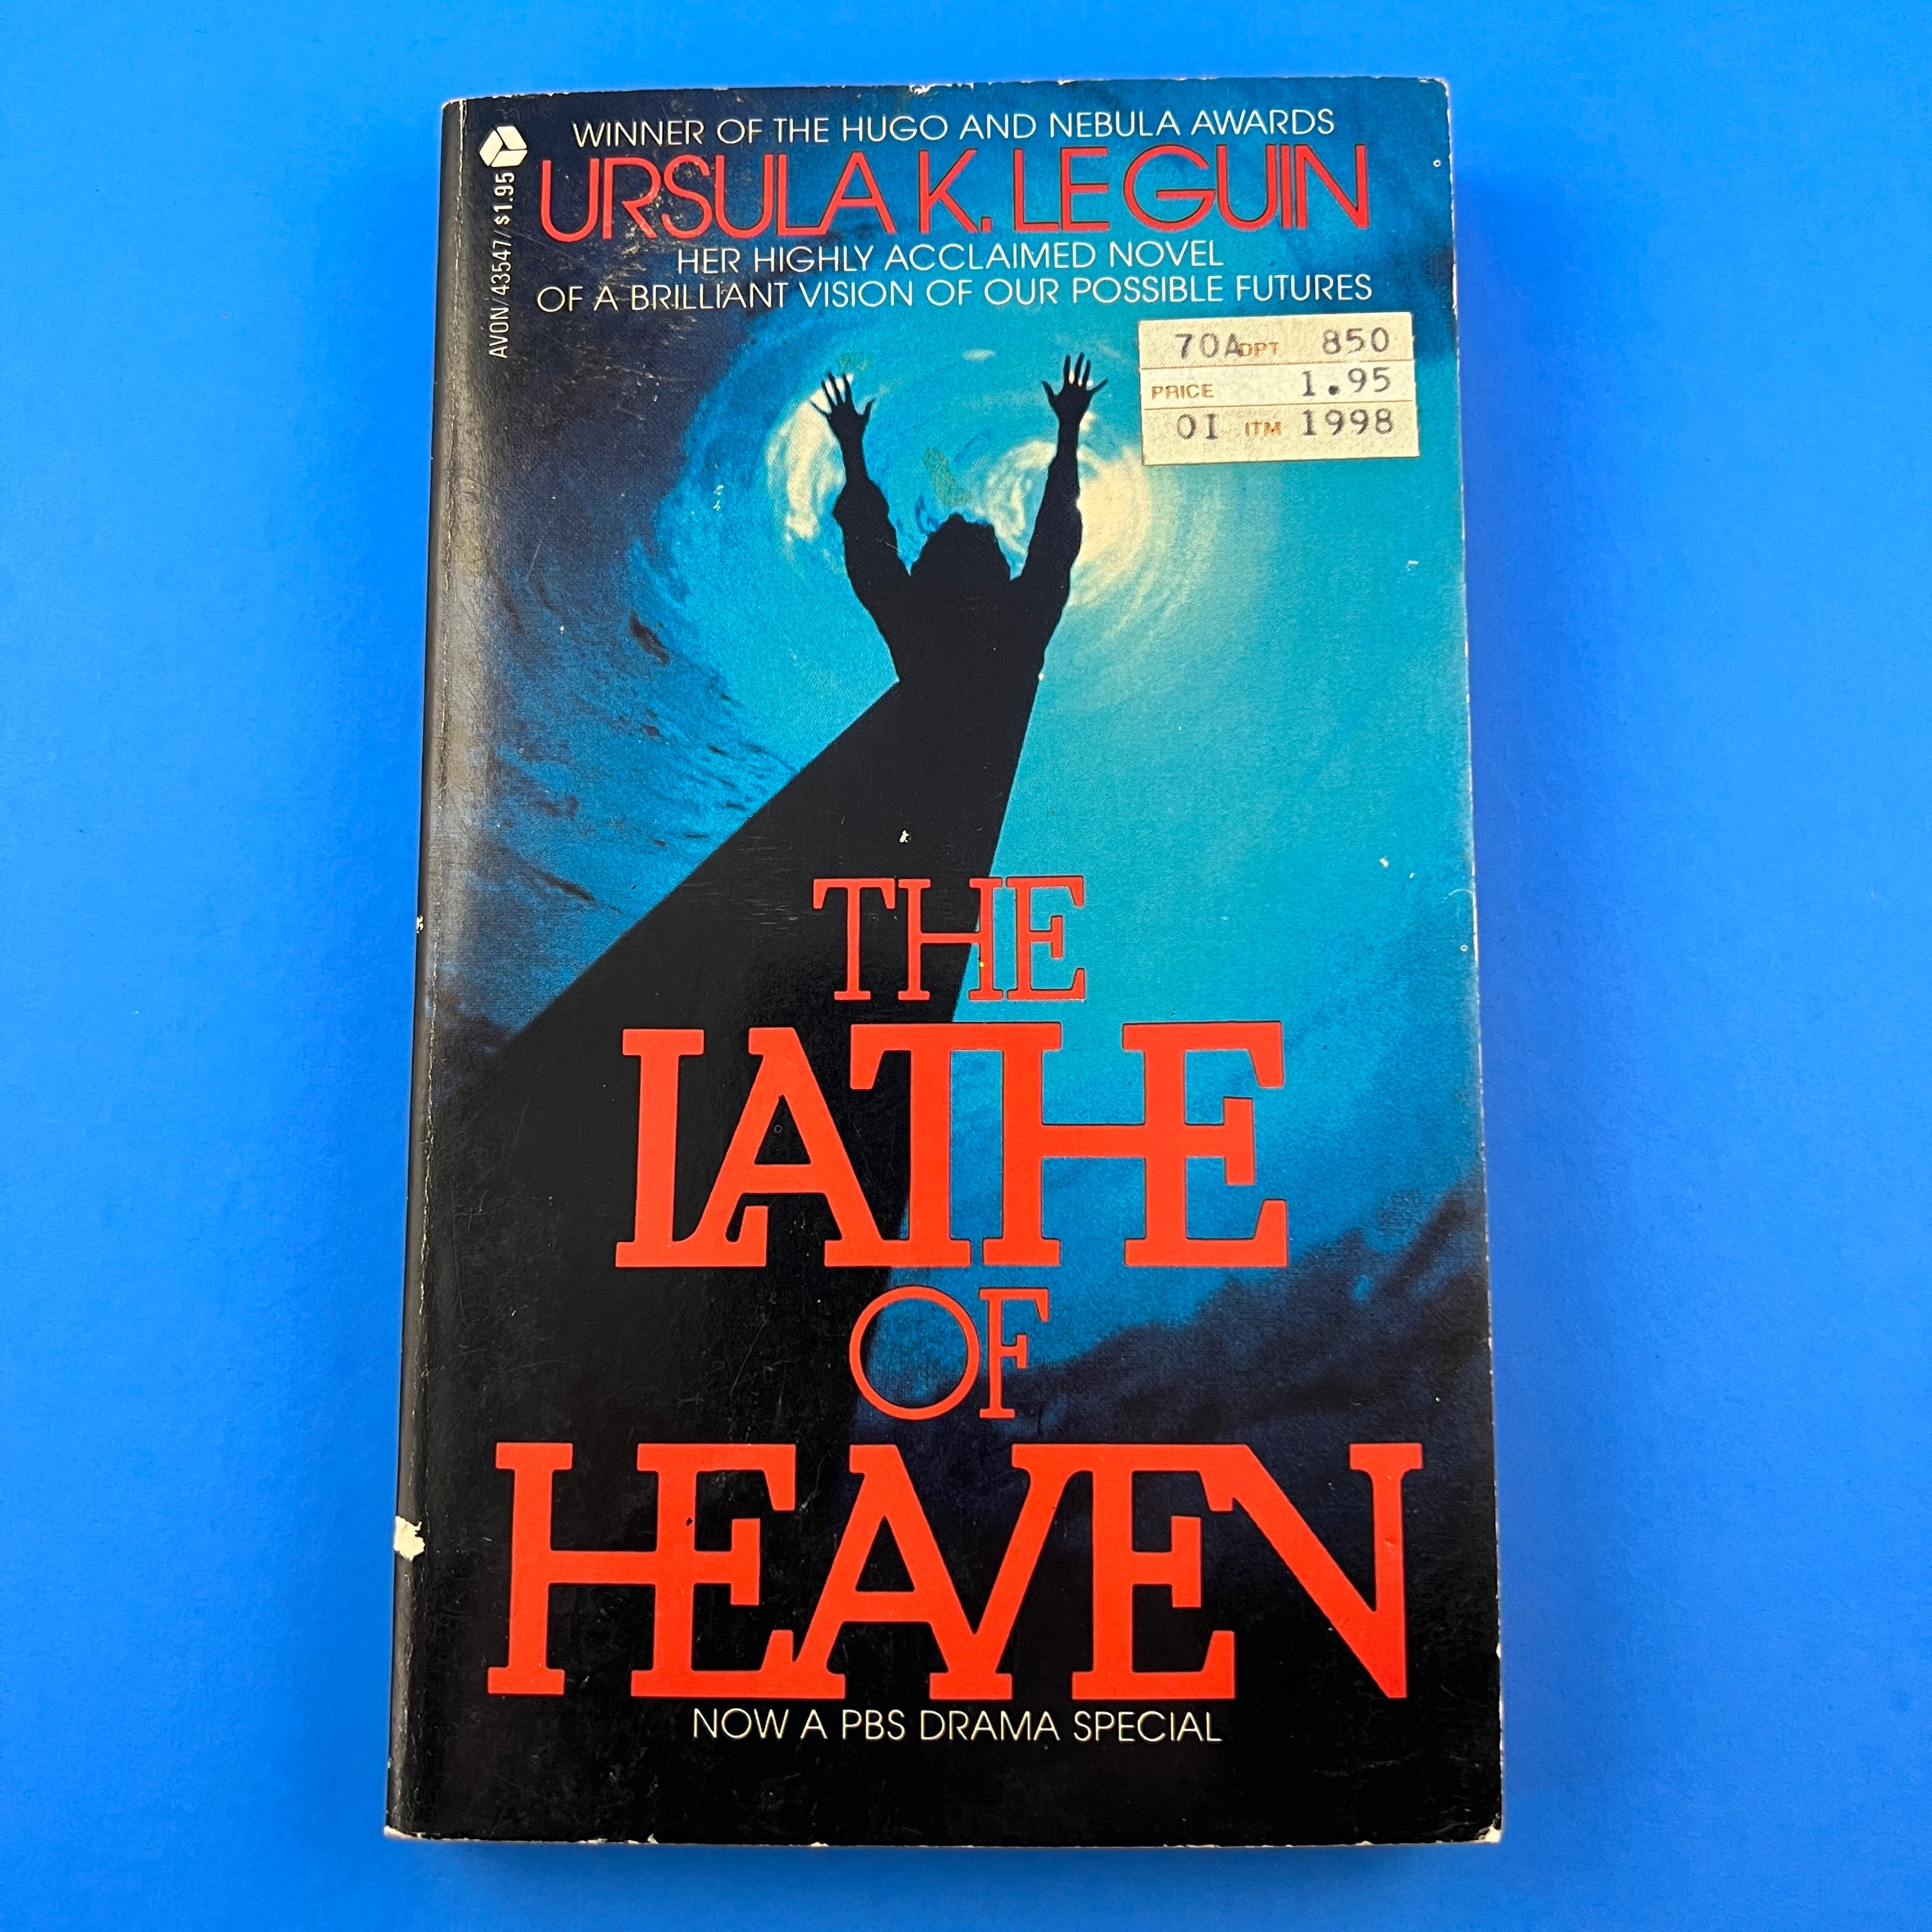 The Lathe of Heaven - Ursula K. Le Guin